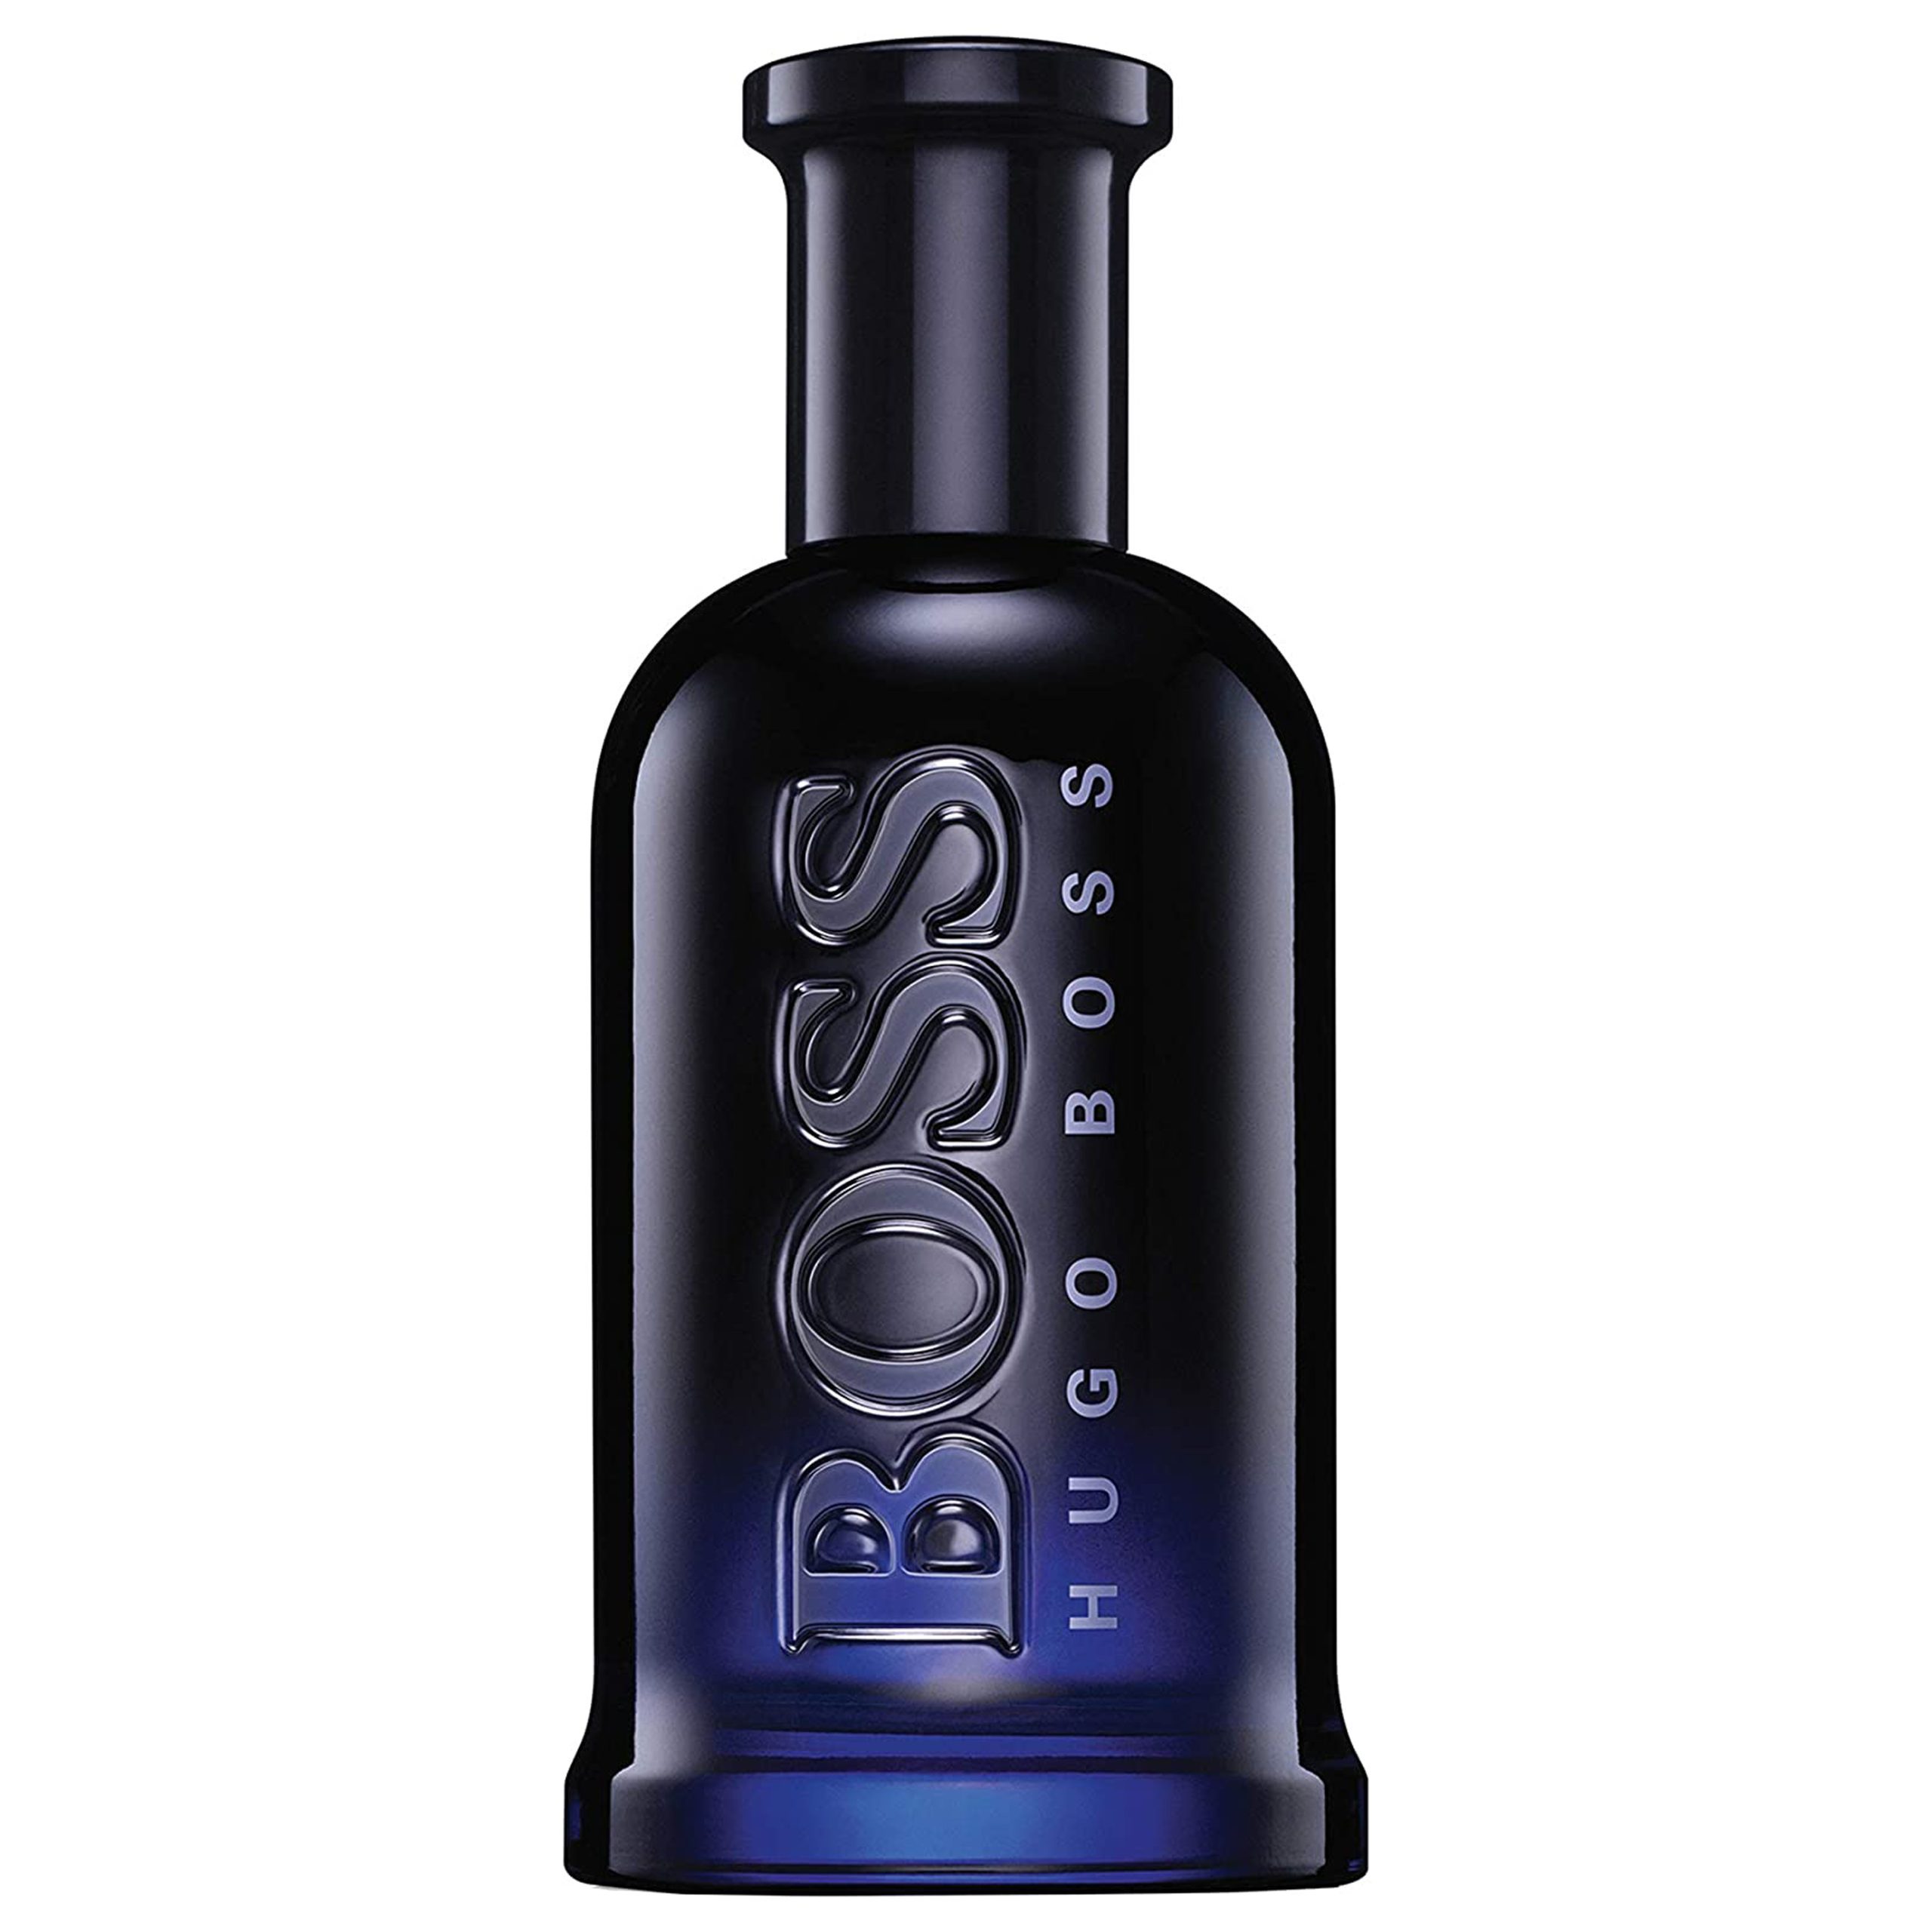 ادکلن مردانه هوگو باس باتلد نایت ادوتویلت Hugo Boss Bottled Night Perfume for Men